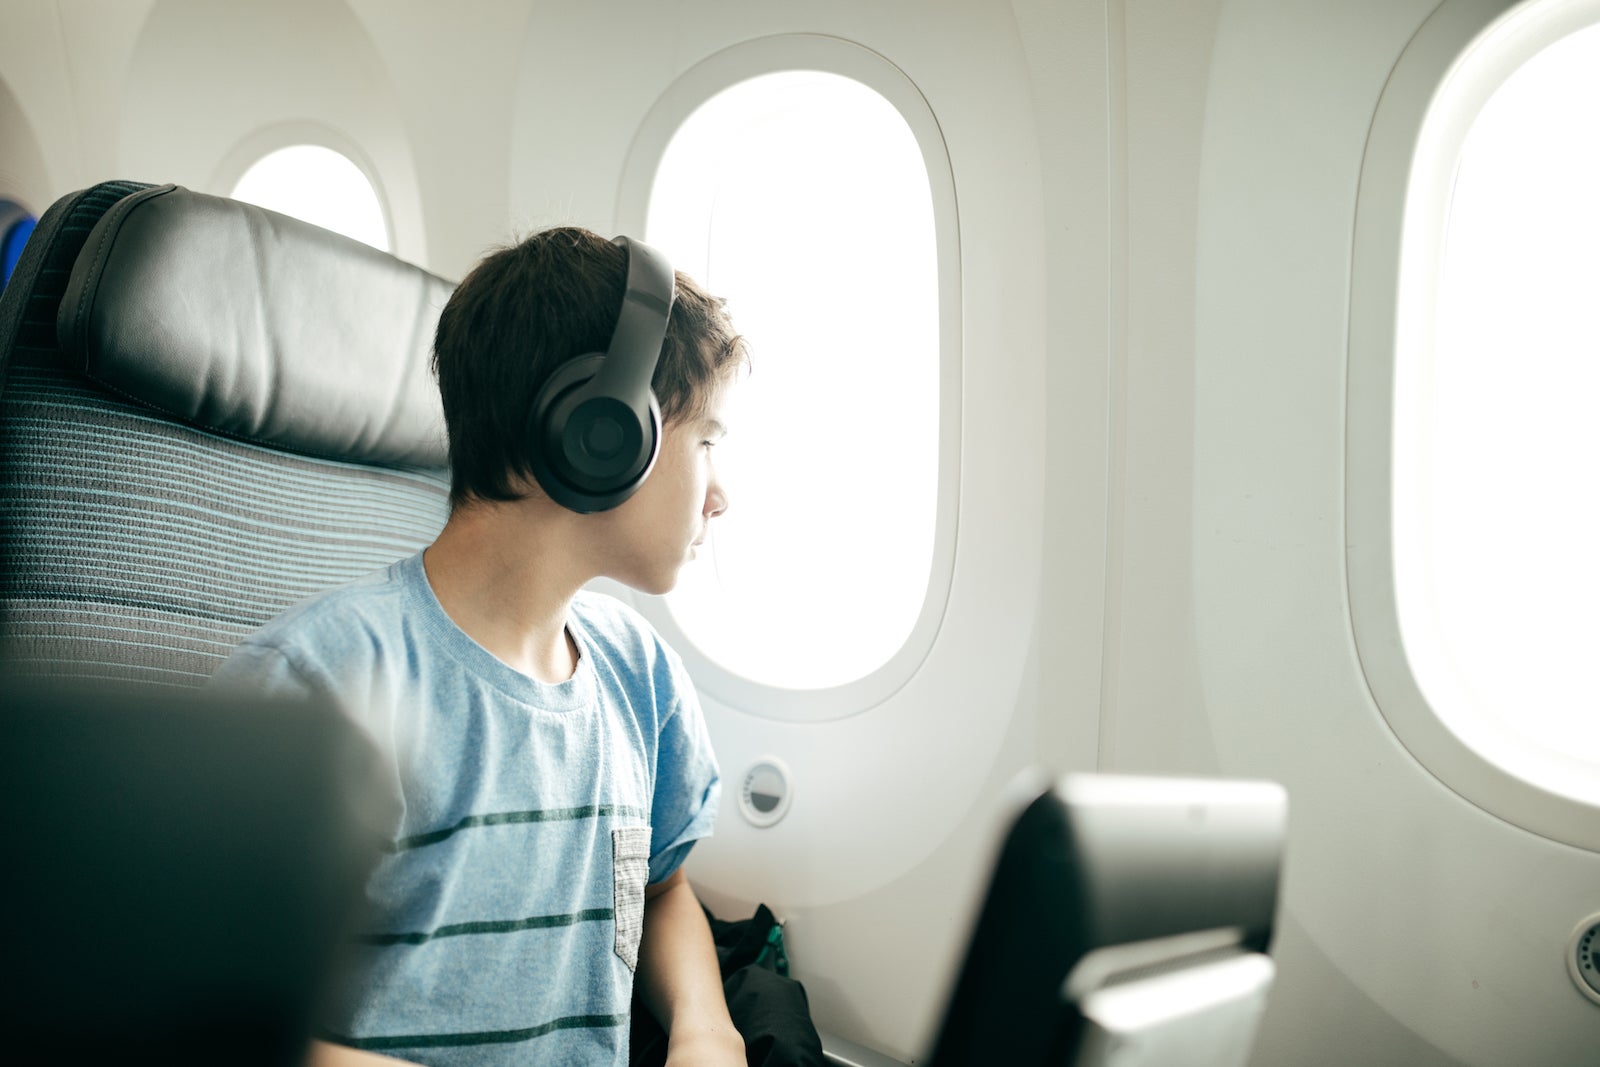 Boy alone plane headphones